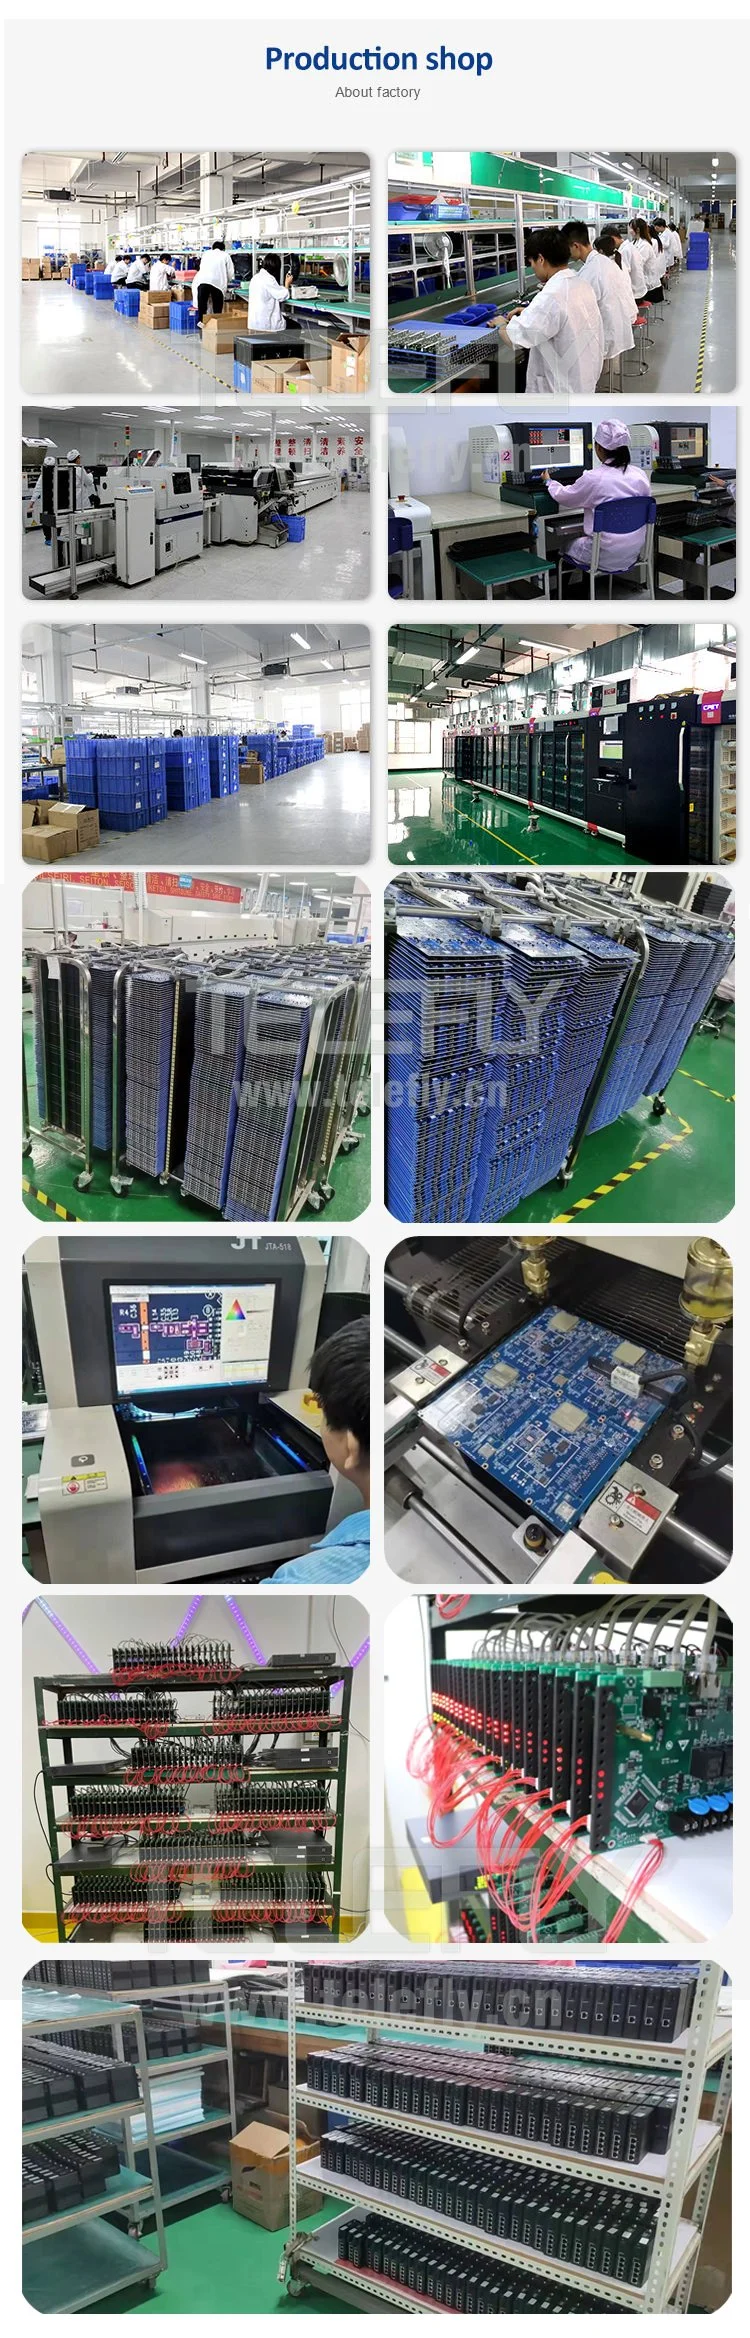 New Original IC Chips Xilinx Xc6slx75-2csg484I Fpga Spartan-6 Lx Family 74637 Cells 45nm (CMOS) Technology 1.2V 484-Pin Csbga in Stock